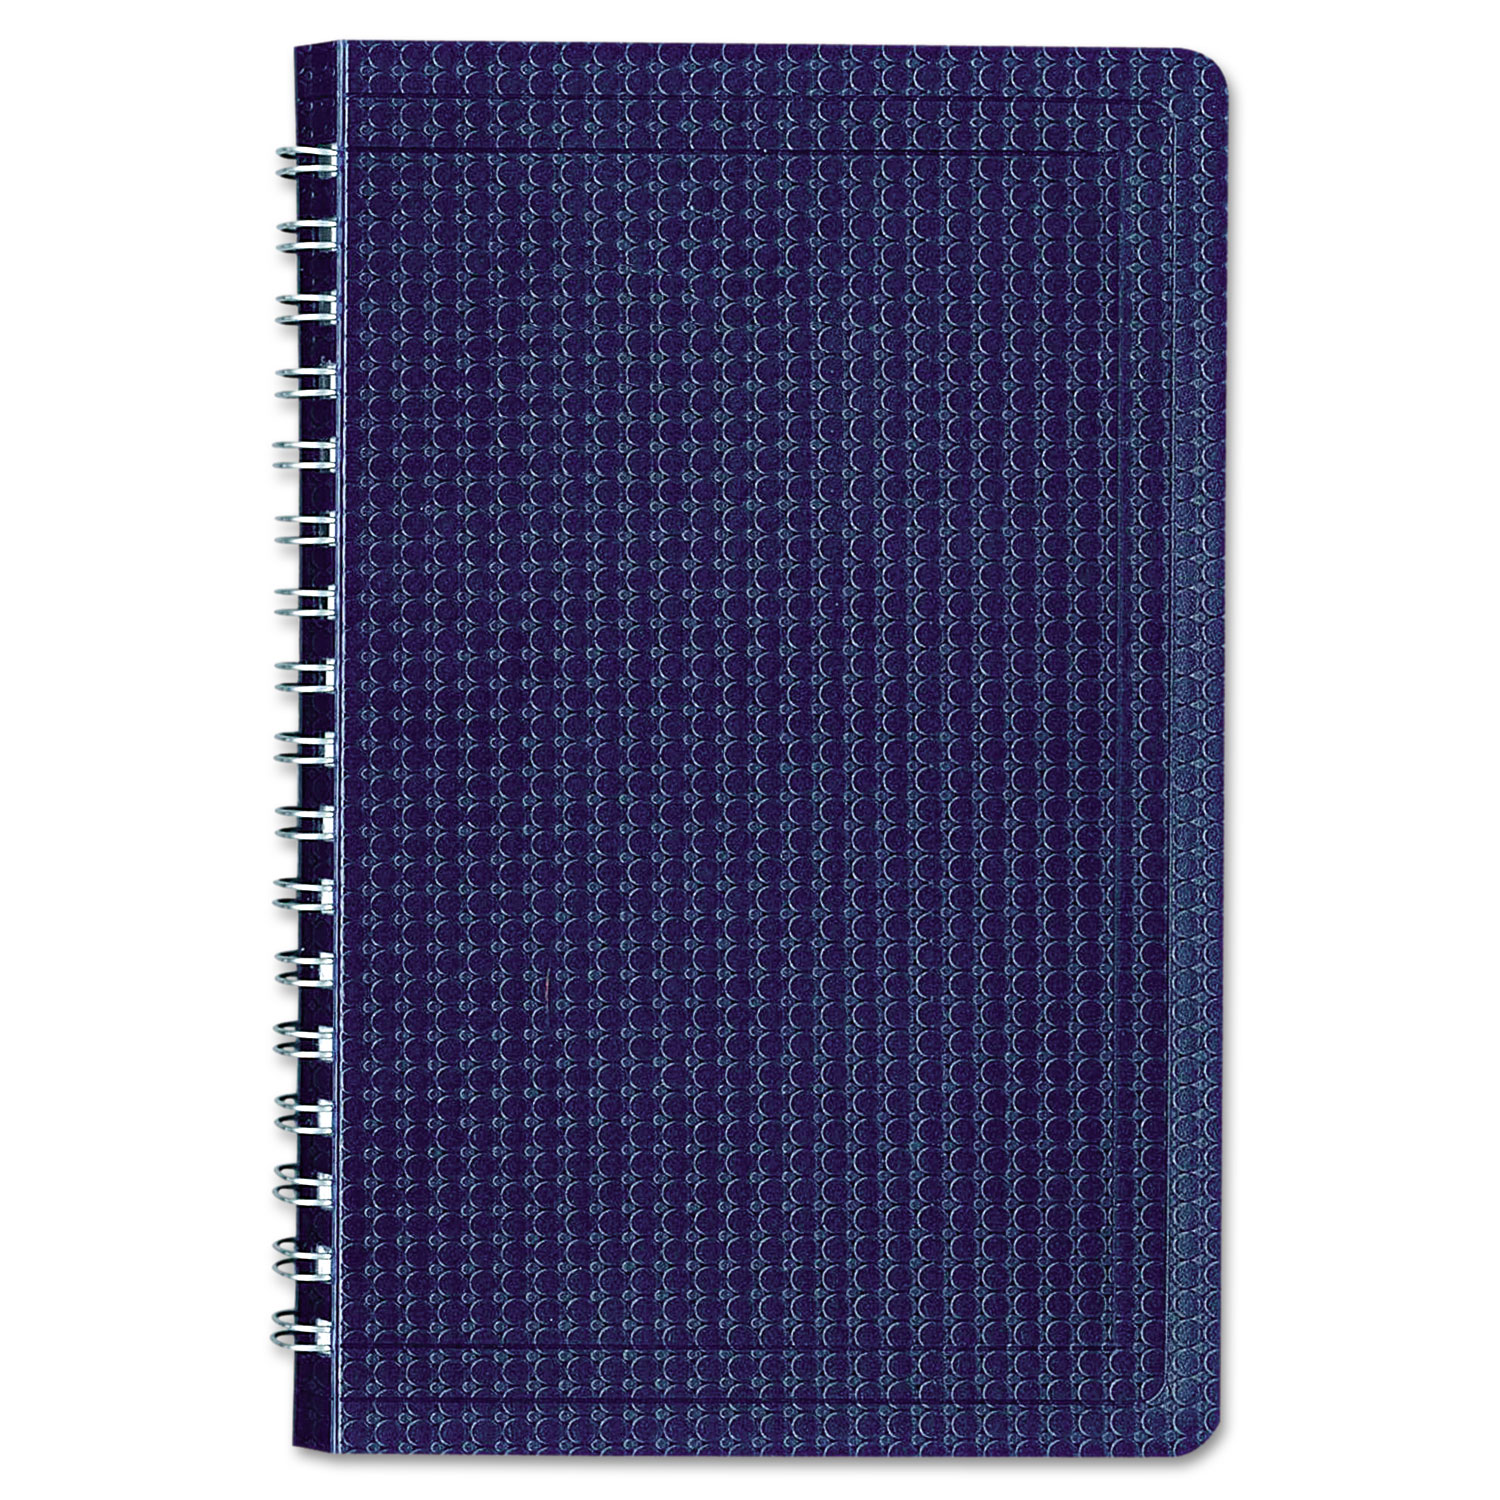  Blueline B40.82 Duraflex Poly Notebook, 1 Subject, Medium/College Rule, Blue Cover, 9.38 x 6, 80 Sheets (REDB4082) 